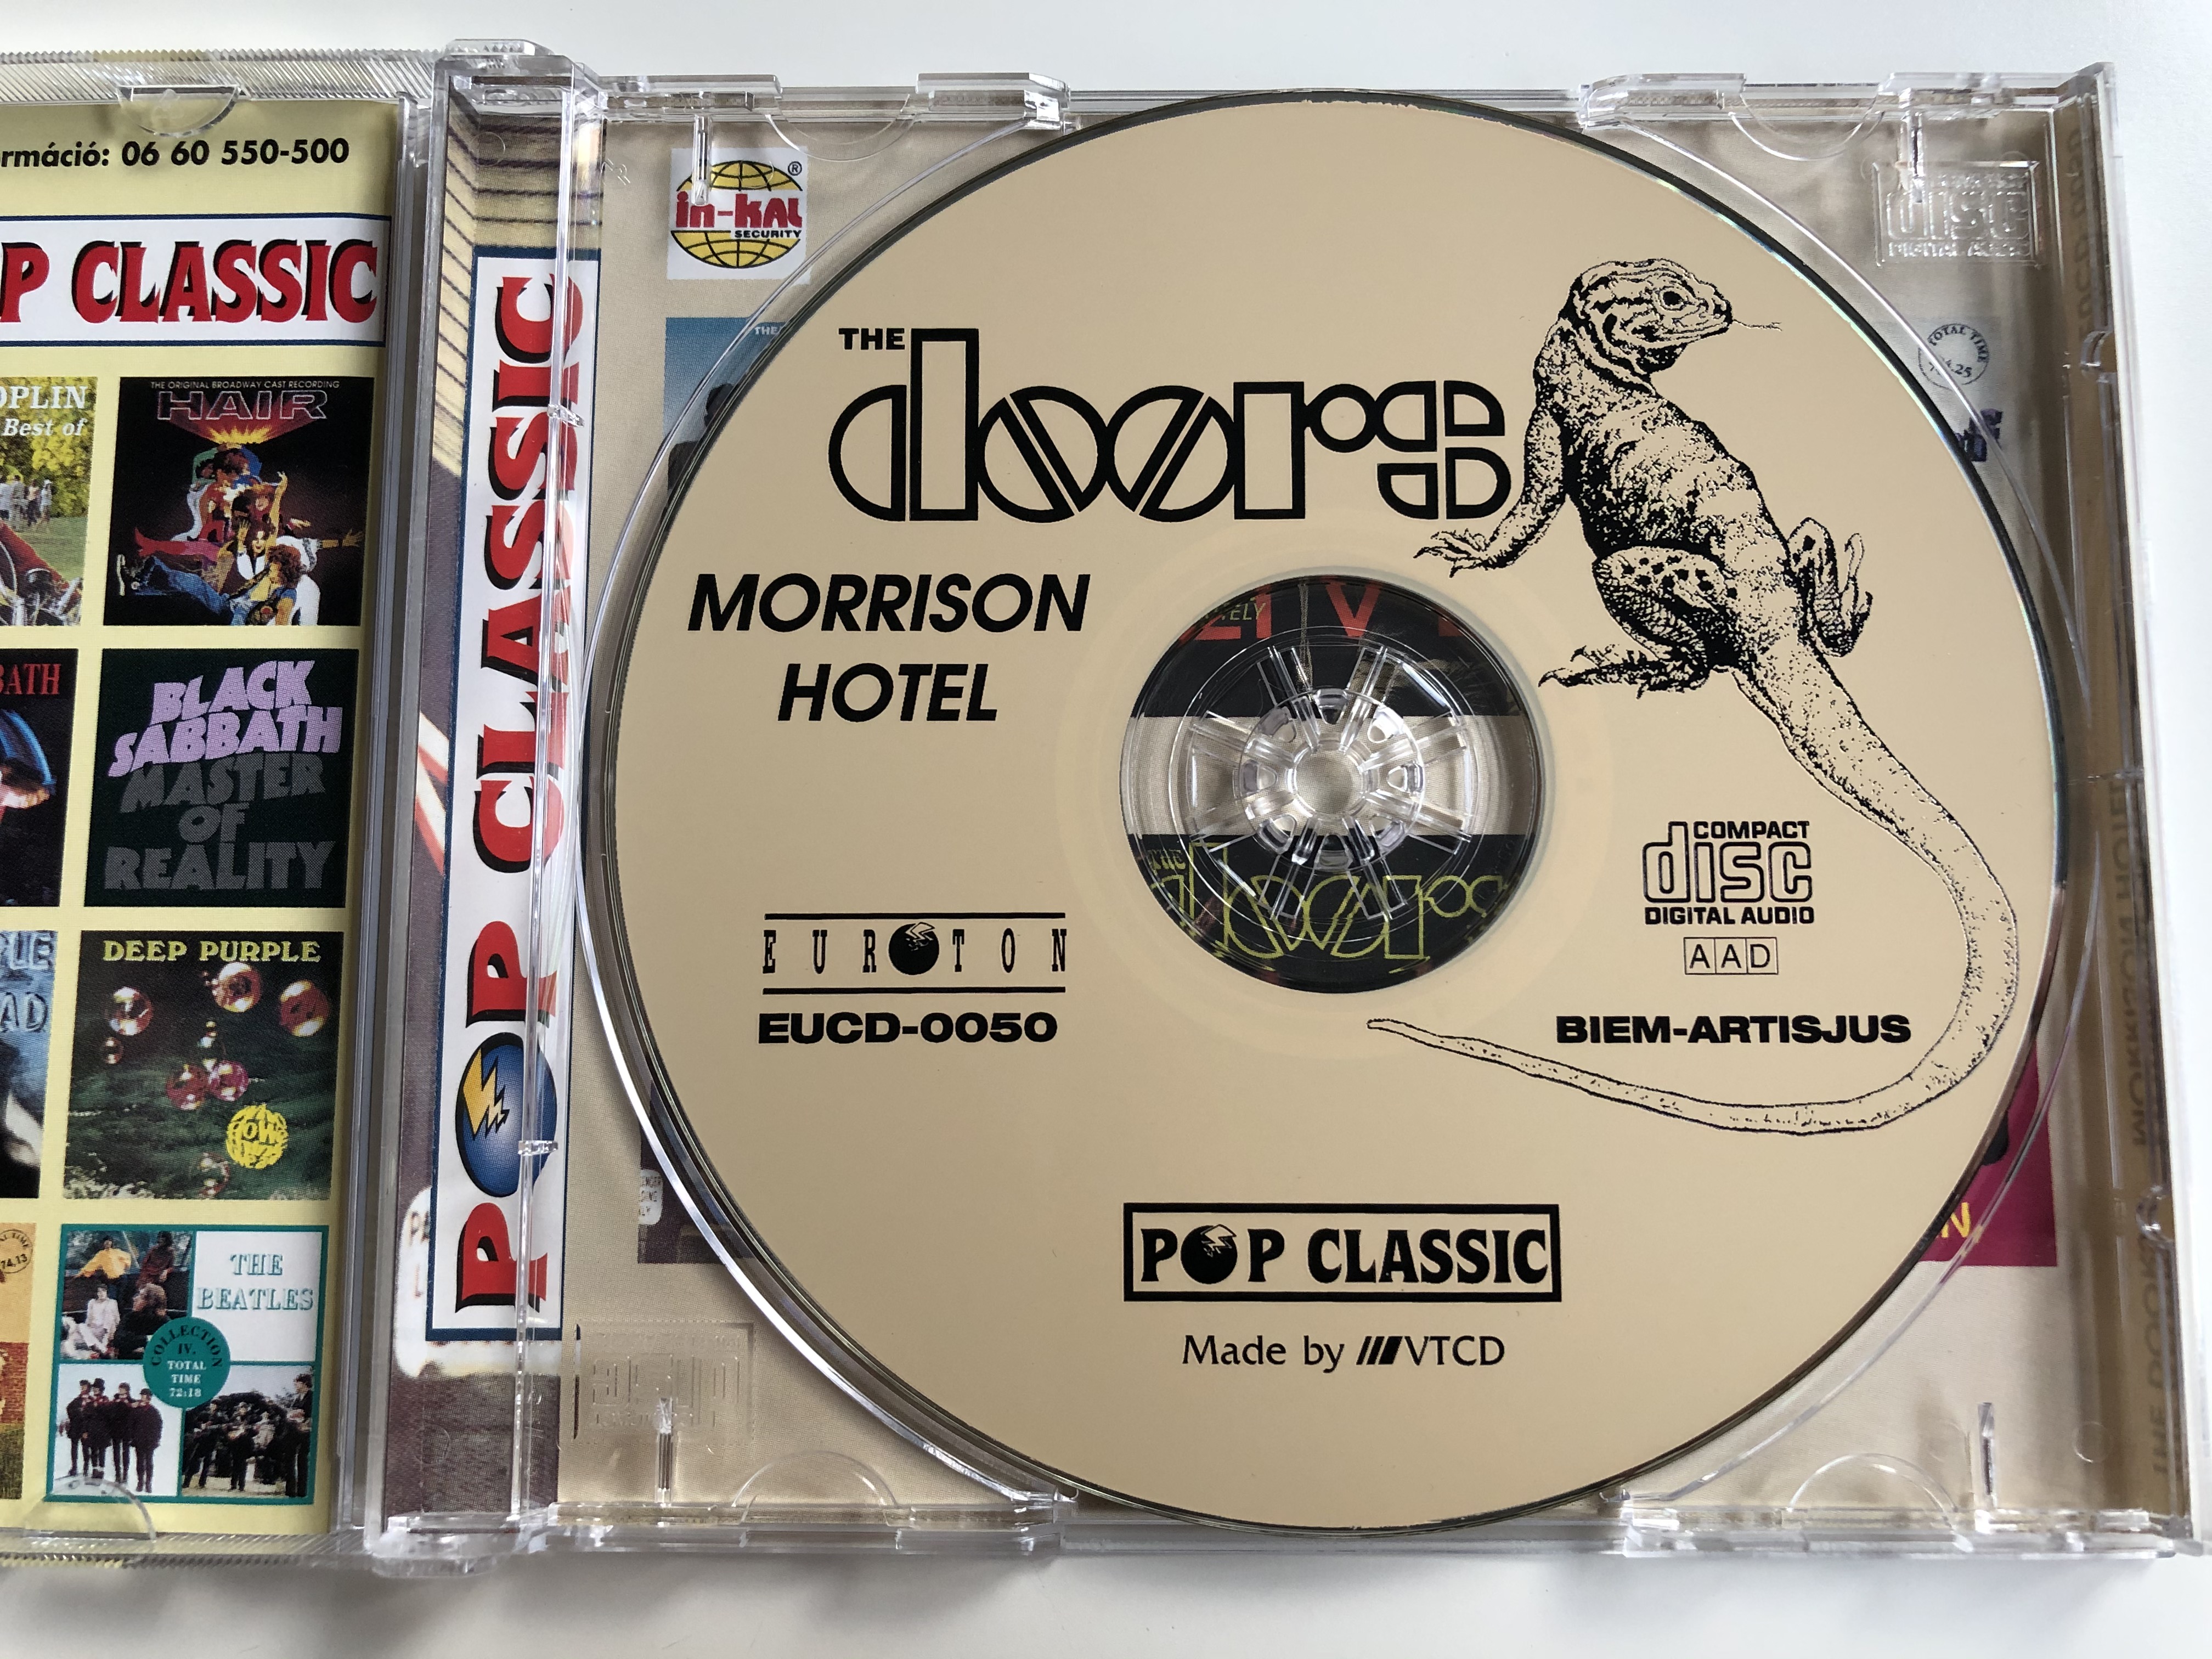 the-doors-morrison-hotel-pop-classic-euroton-audio-cd-eucd-0050-2-.jpg